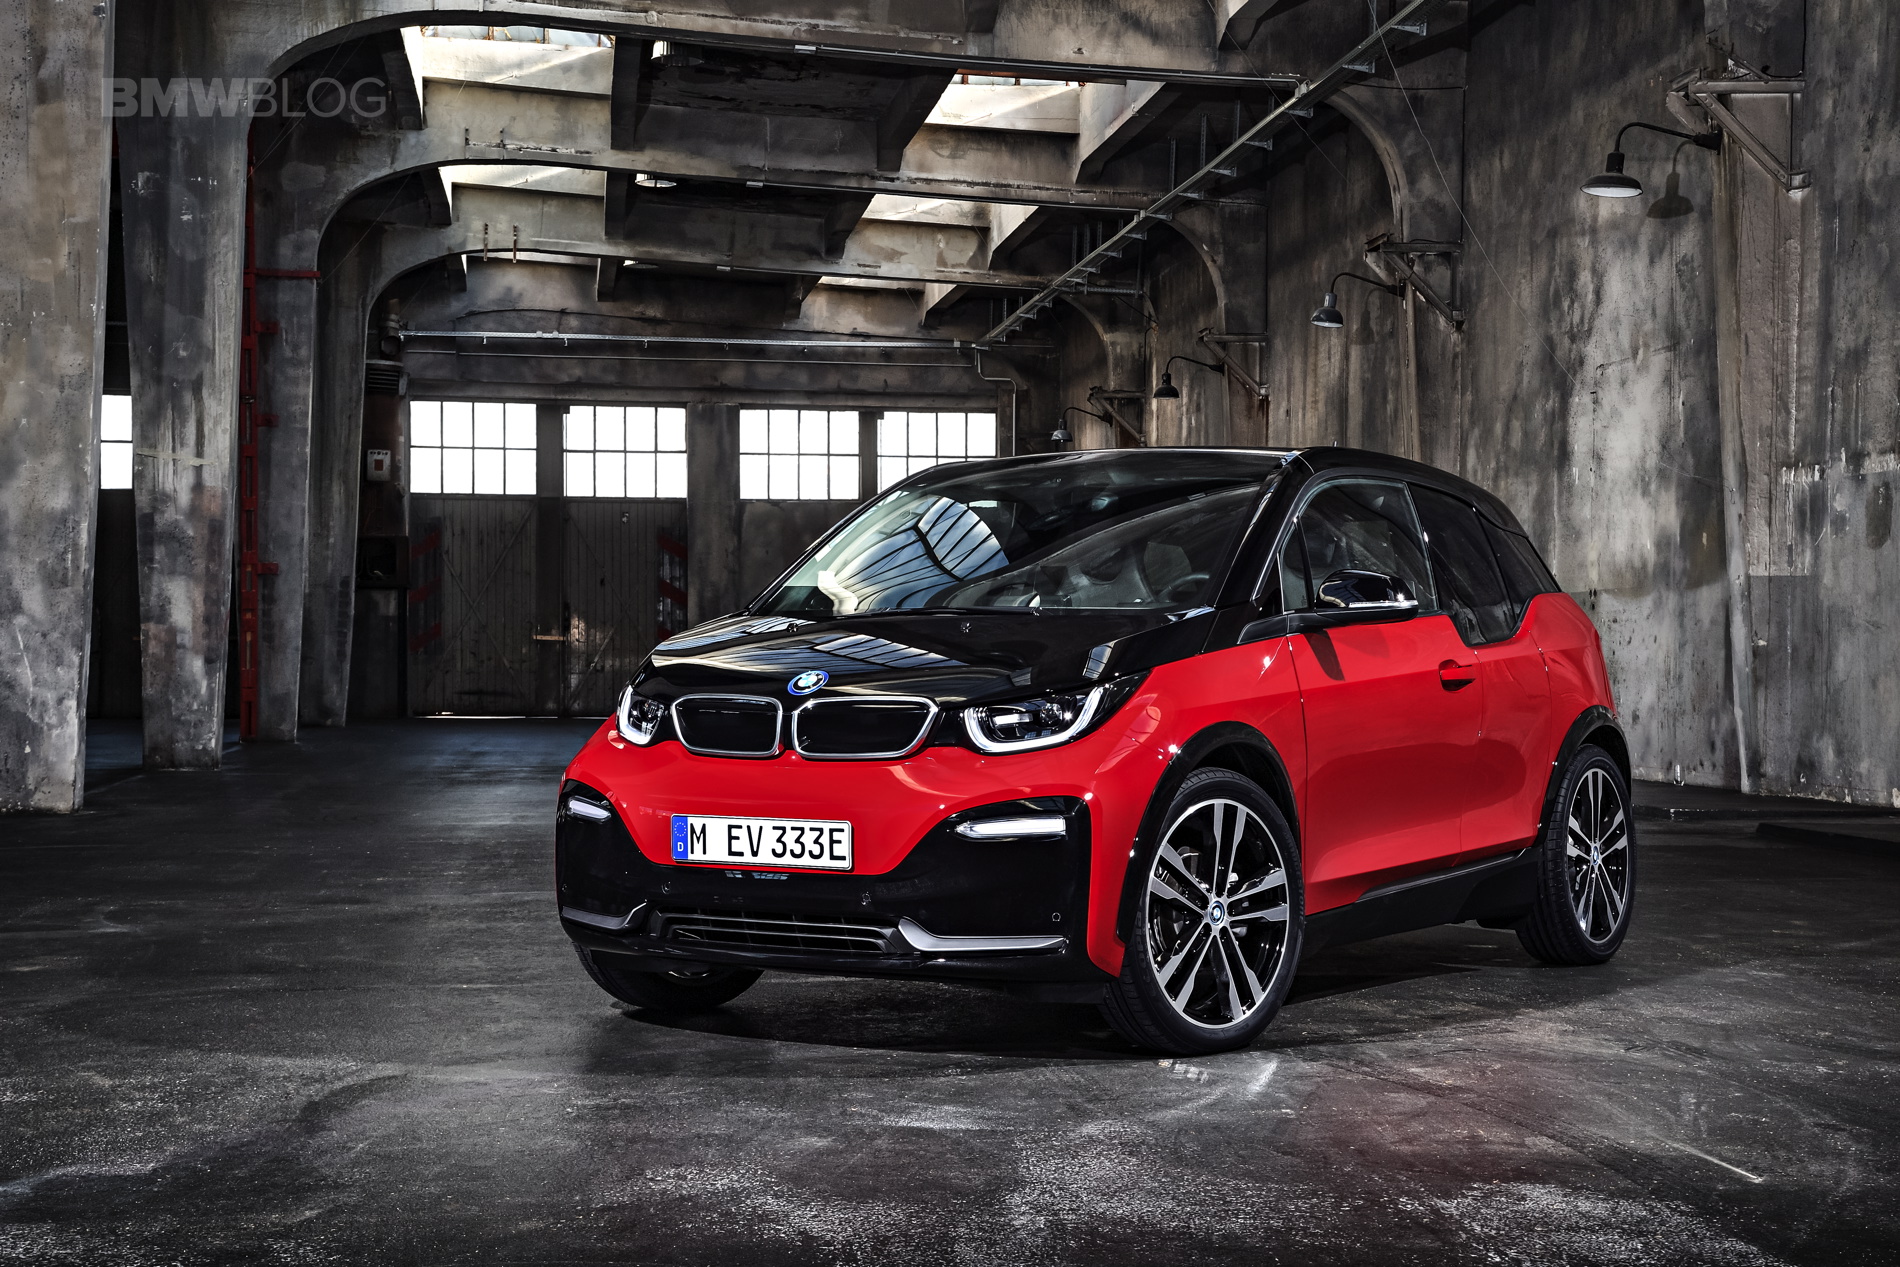 BMW adds sport model to i3 family